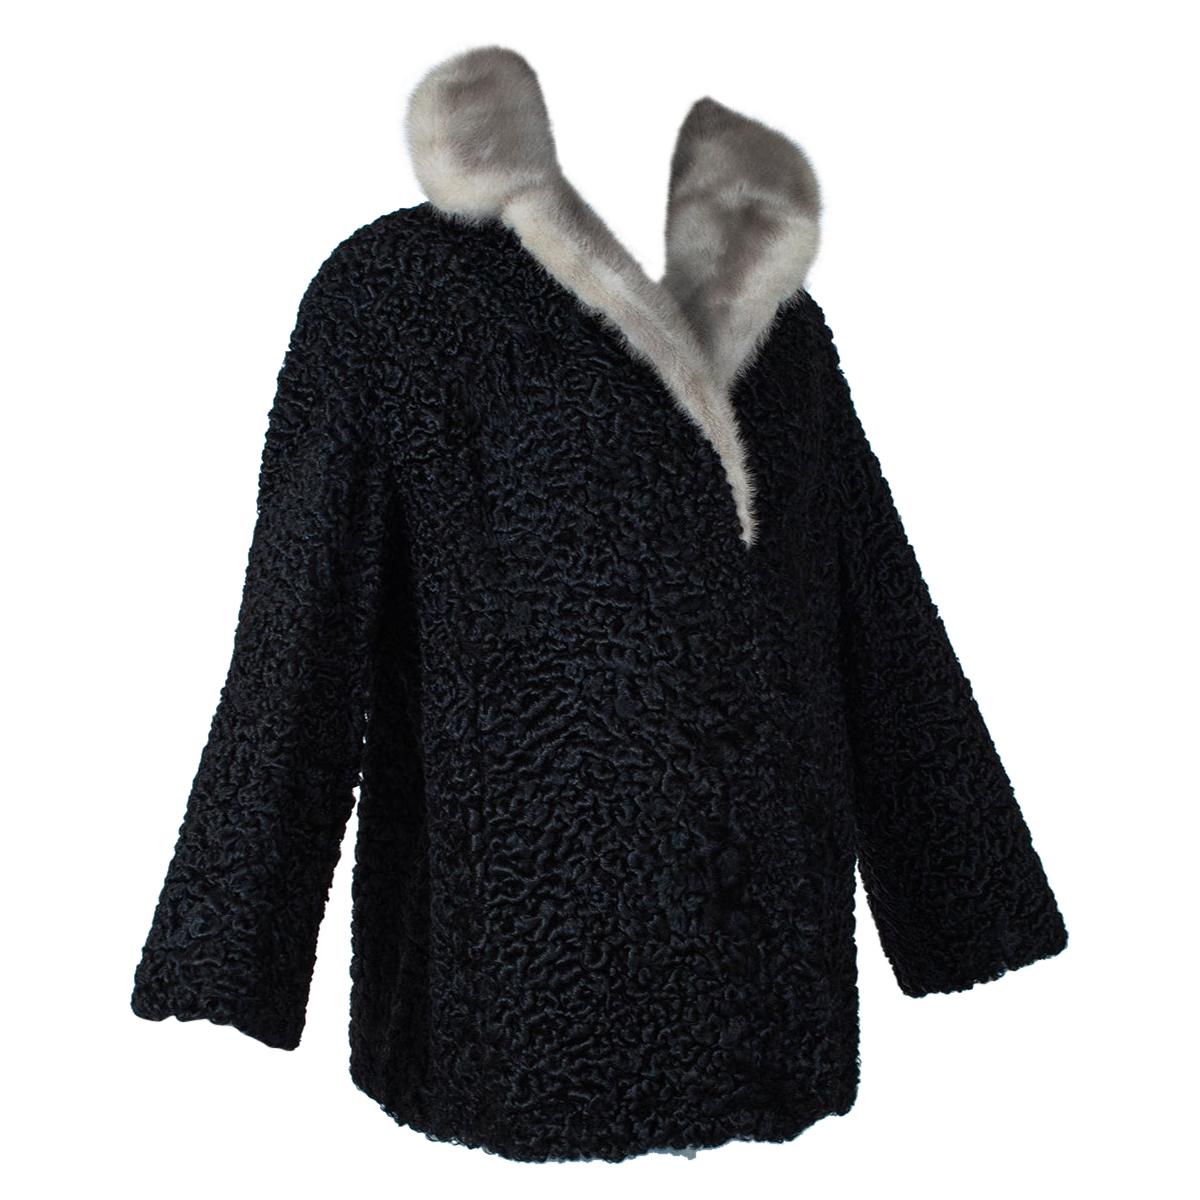 Black A-Line Astrakhan Fur Jacket with Silver Mink Collar – Large, 1950s